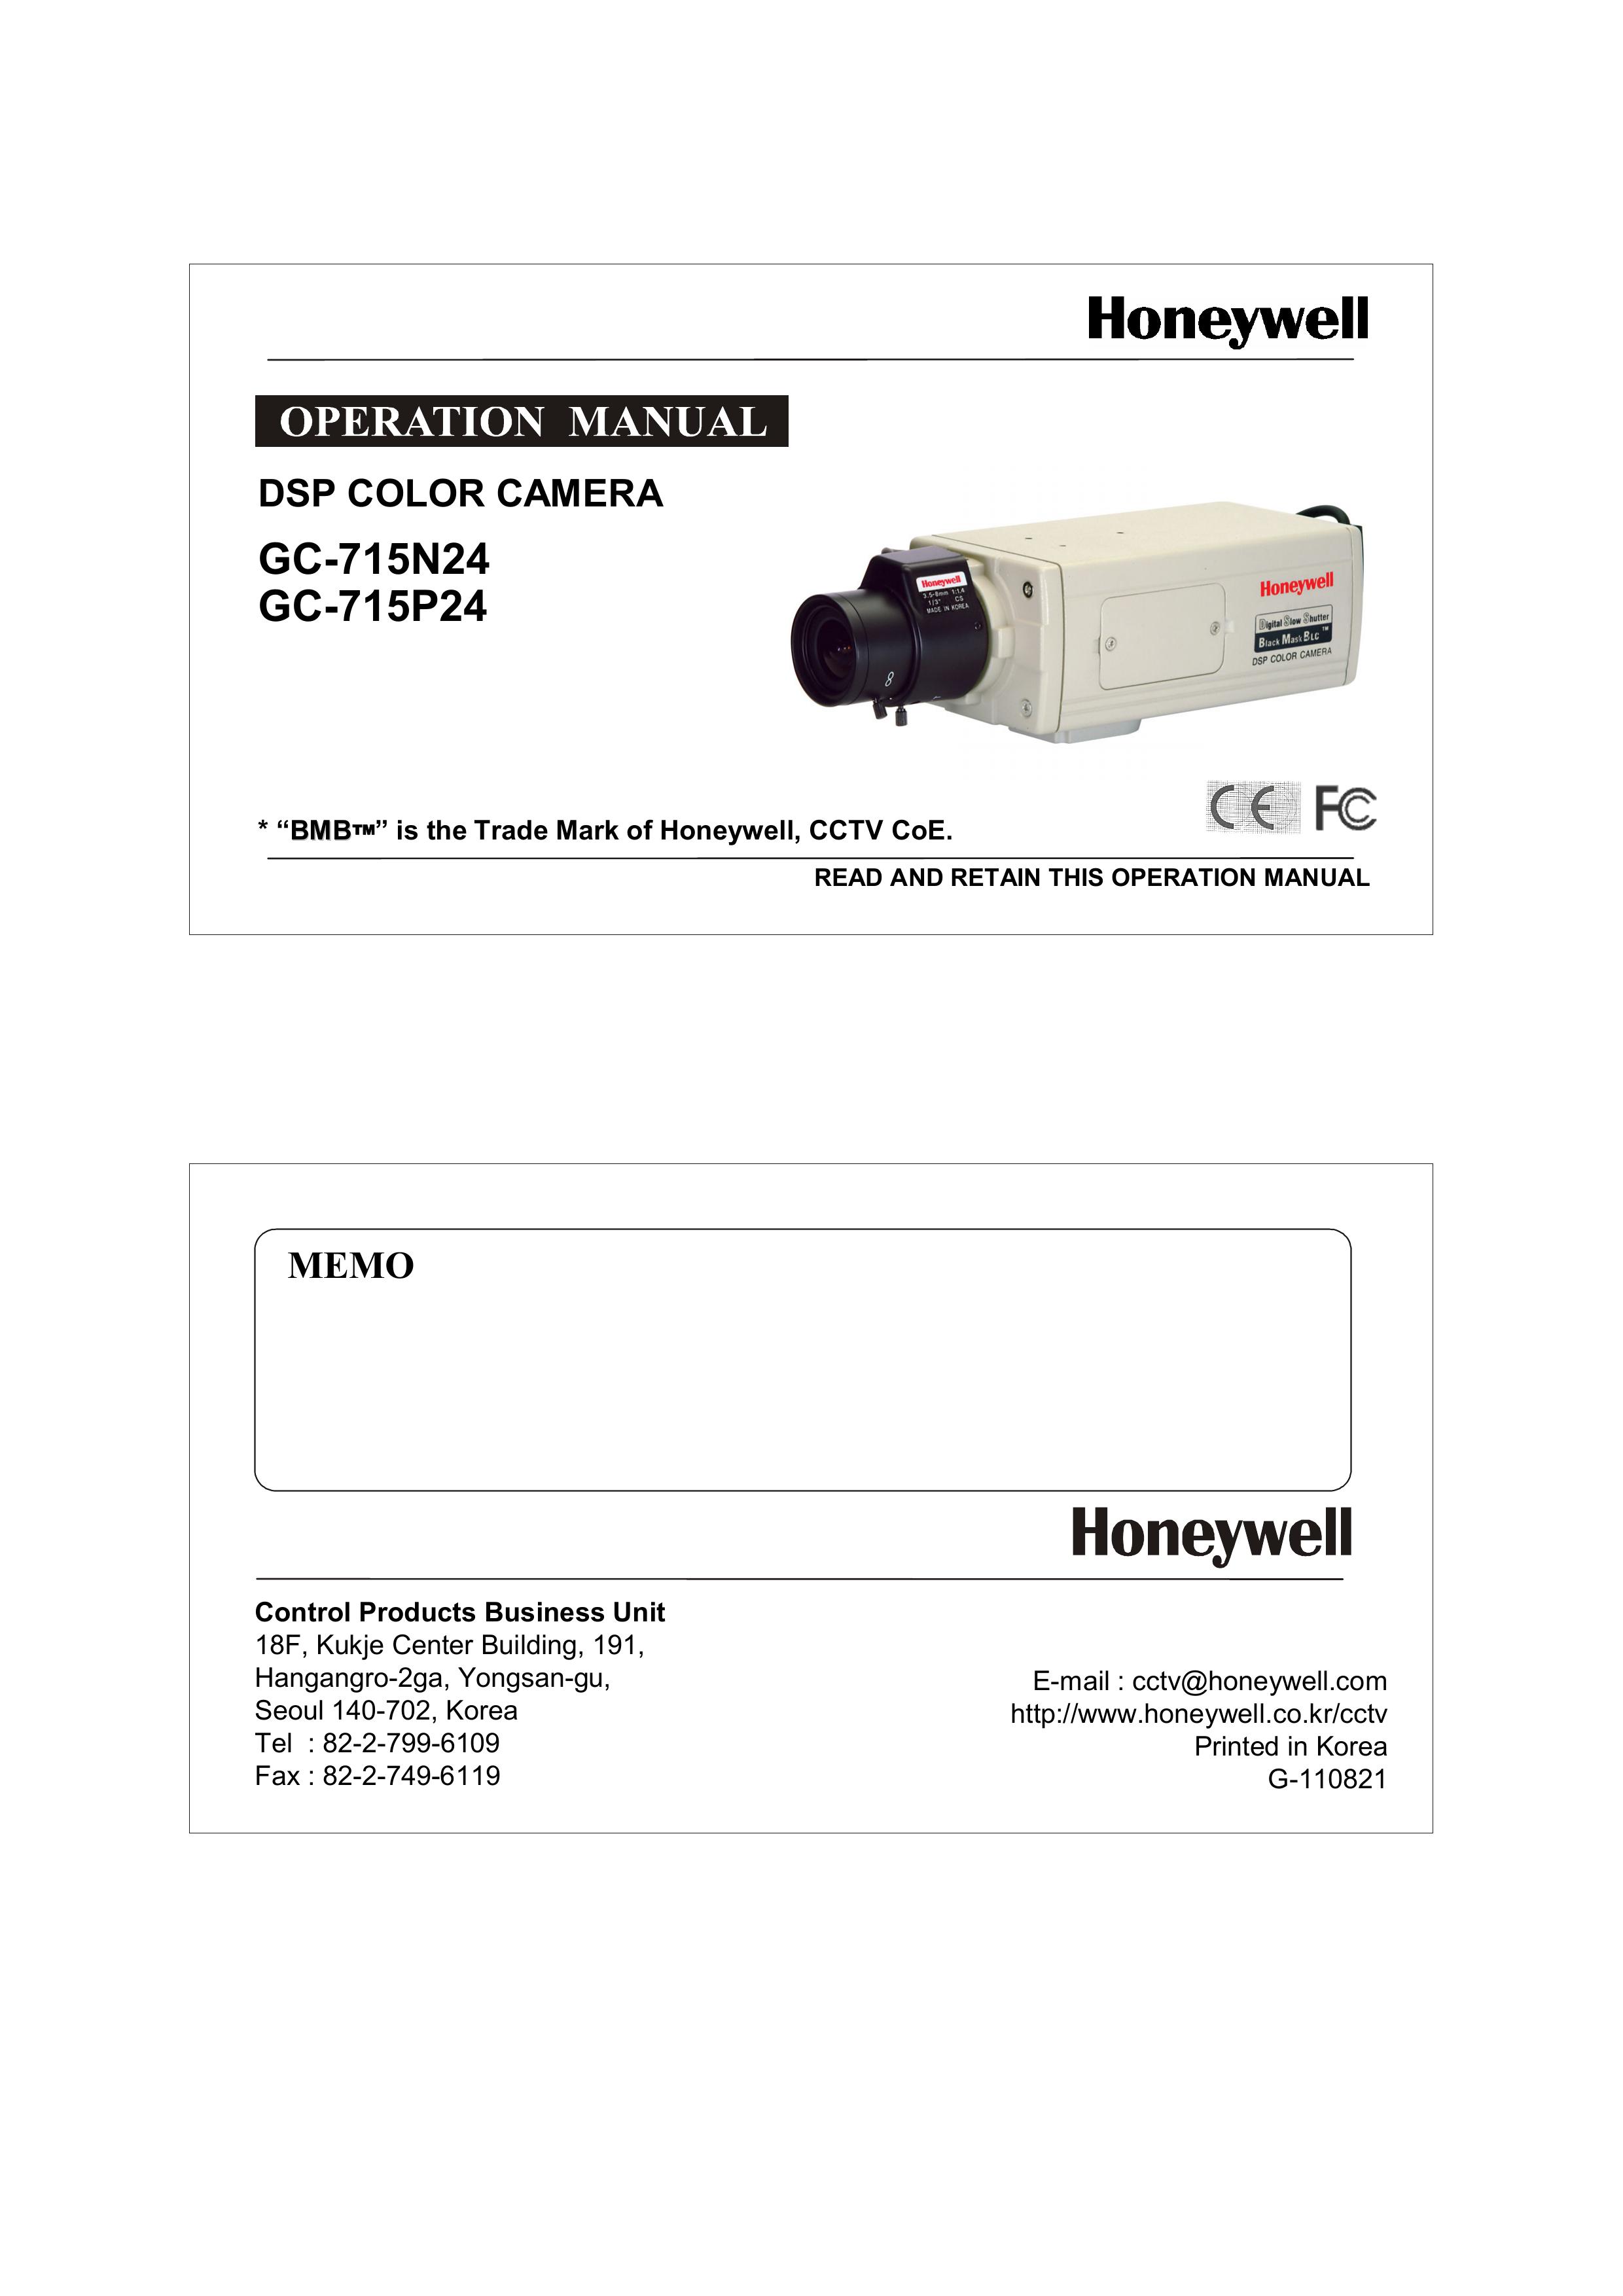 Honeywell GC-715P24 Digital Camera User Manual